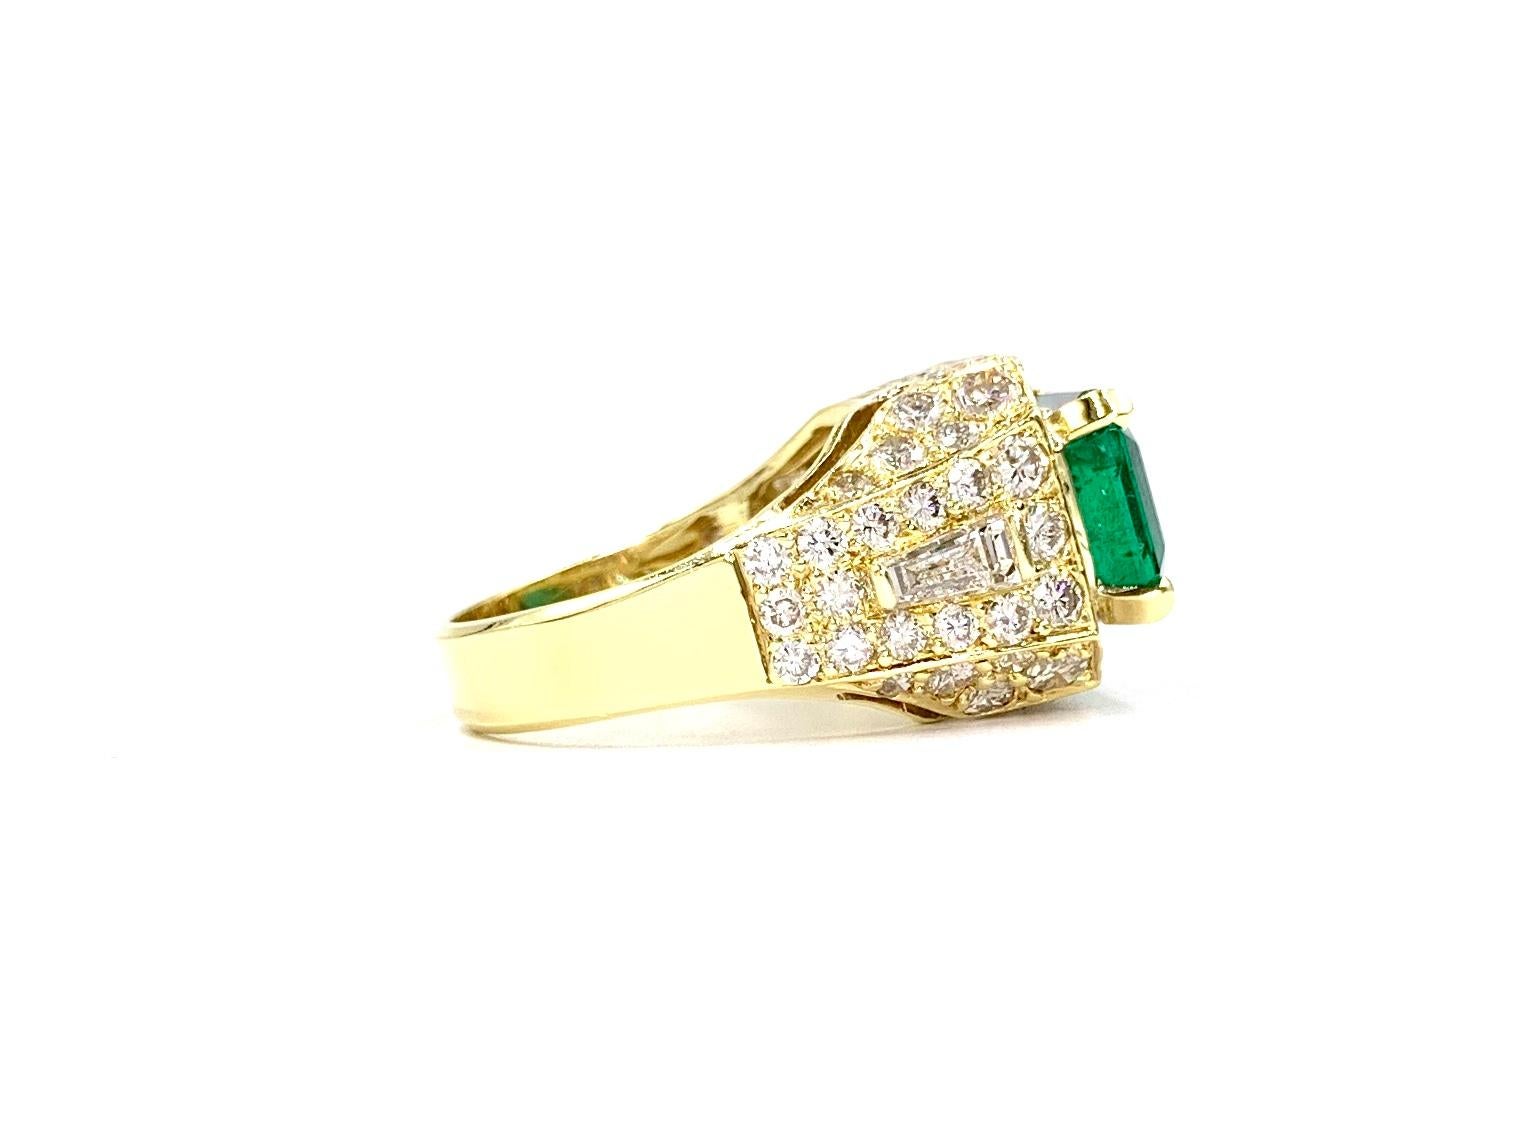 Women's 18 Karat 5.87 Carat Emerald and Diamond Cocktail Ring For Sale